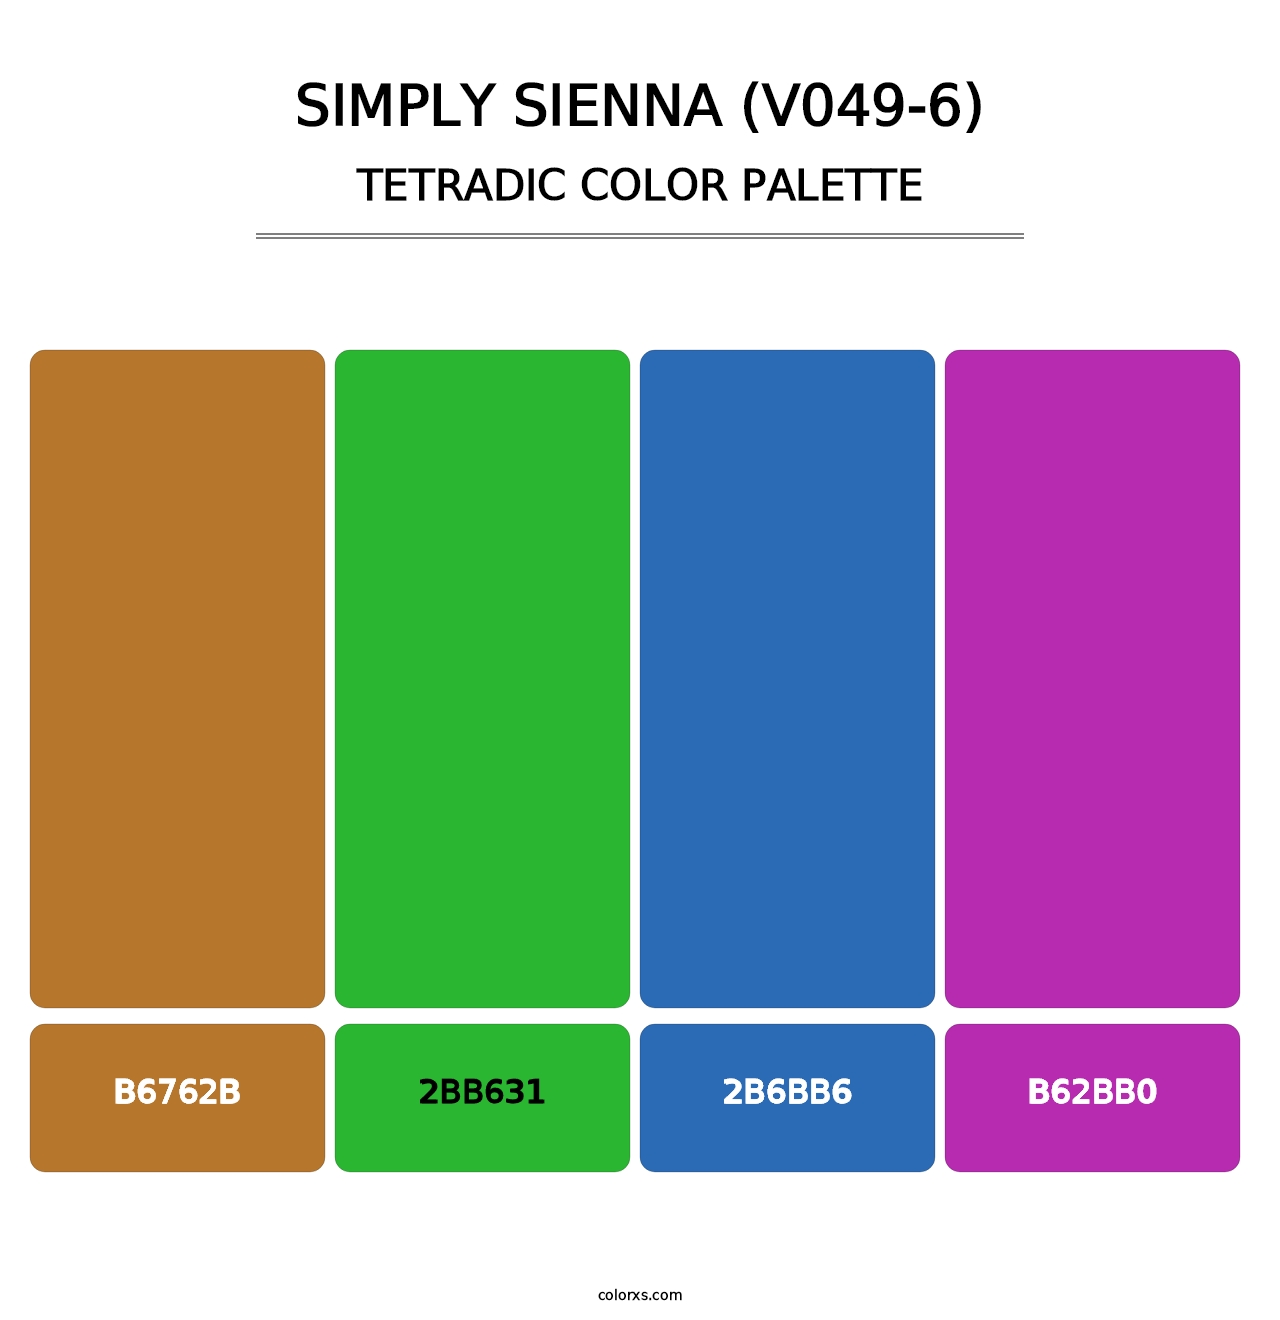 Simply Sienna (V049-6) - Tetradic Color Palette